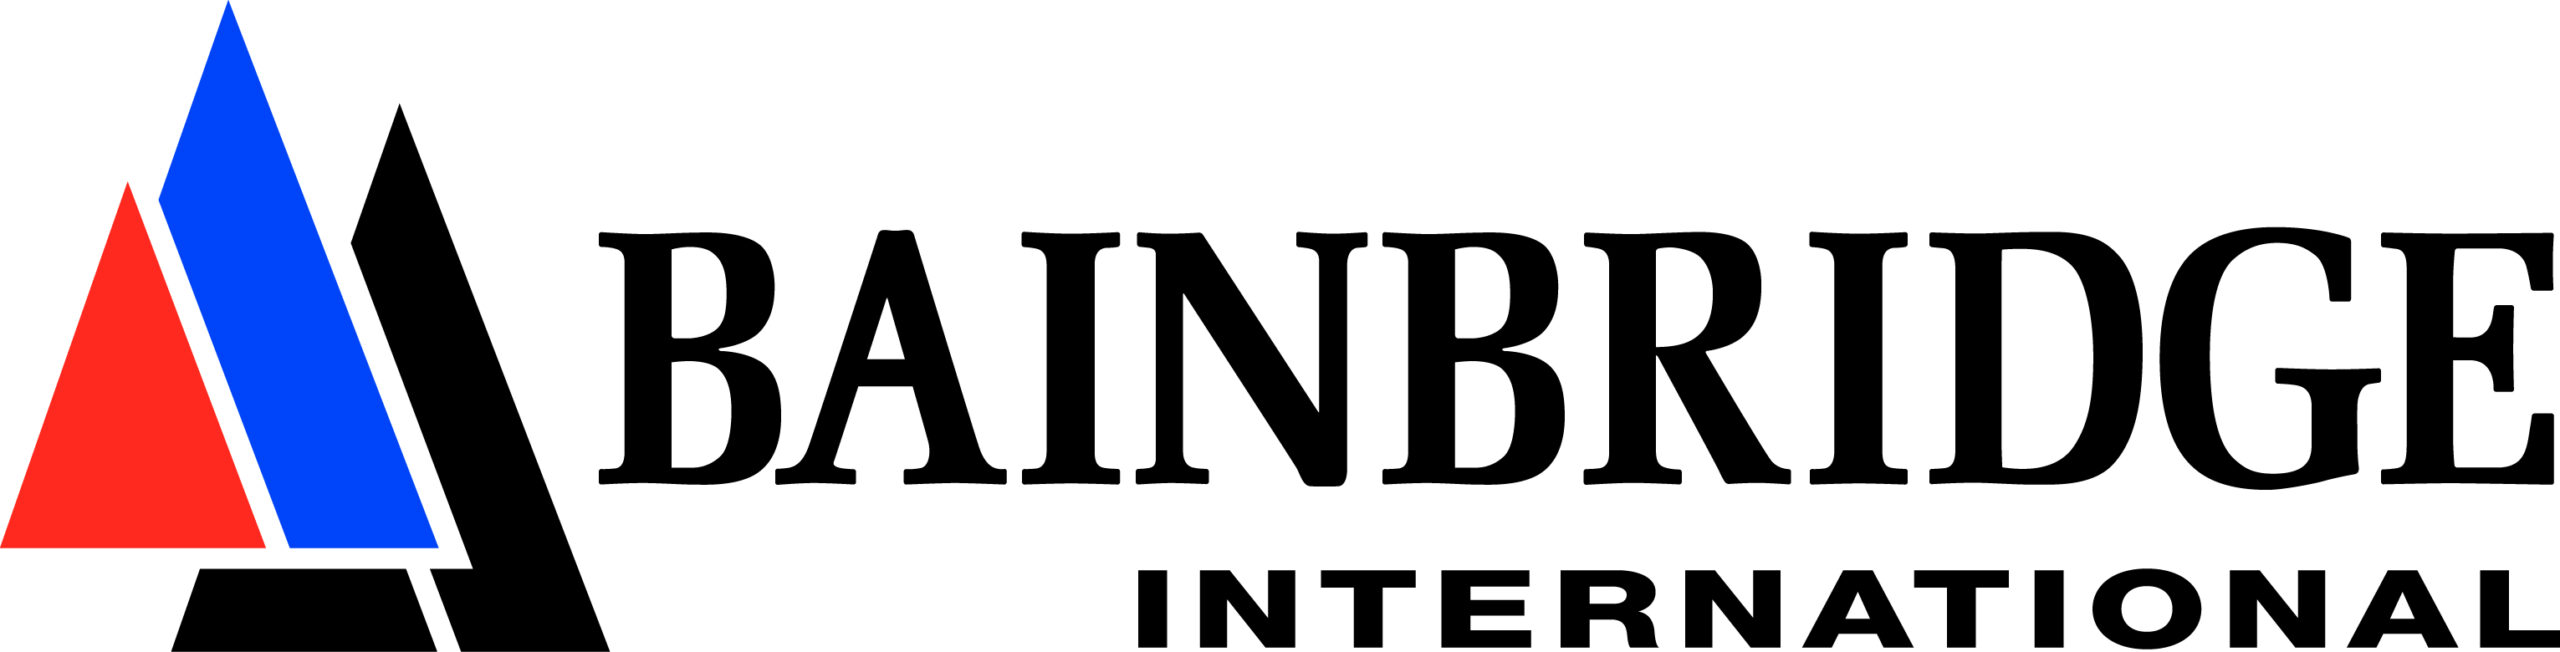 Bainbridge International Ltd Appoints Sky International as new distributor for Hong Kong & China